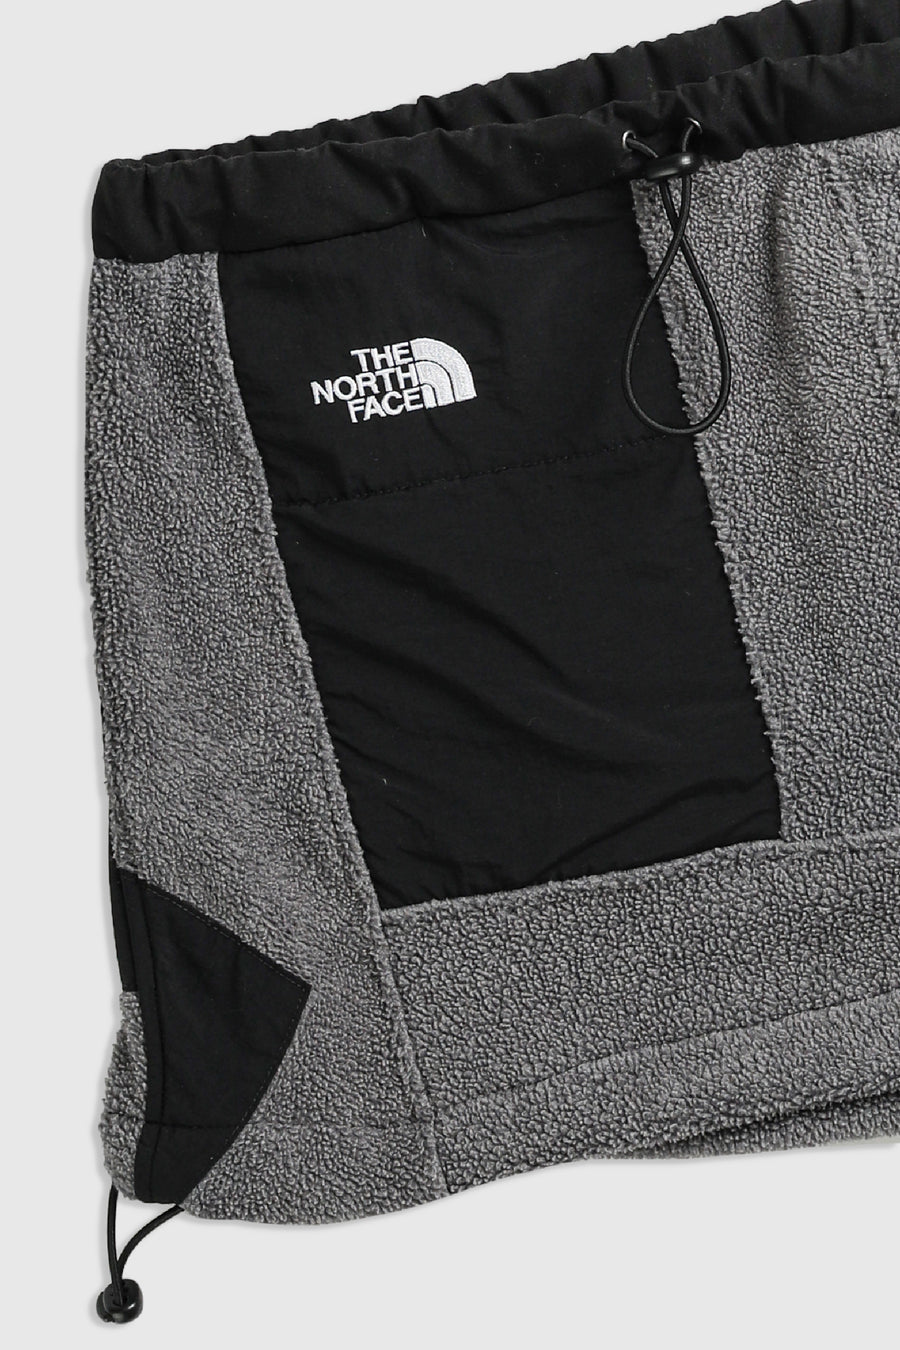 Rework North Face Fleece Mini Skirt - XS, S, M, L, XL